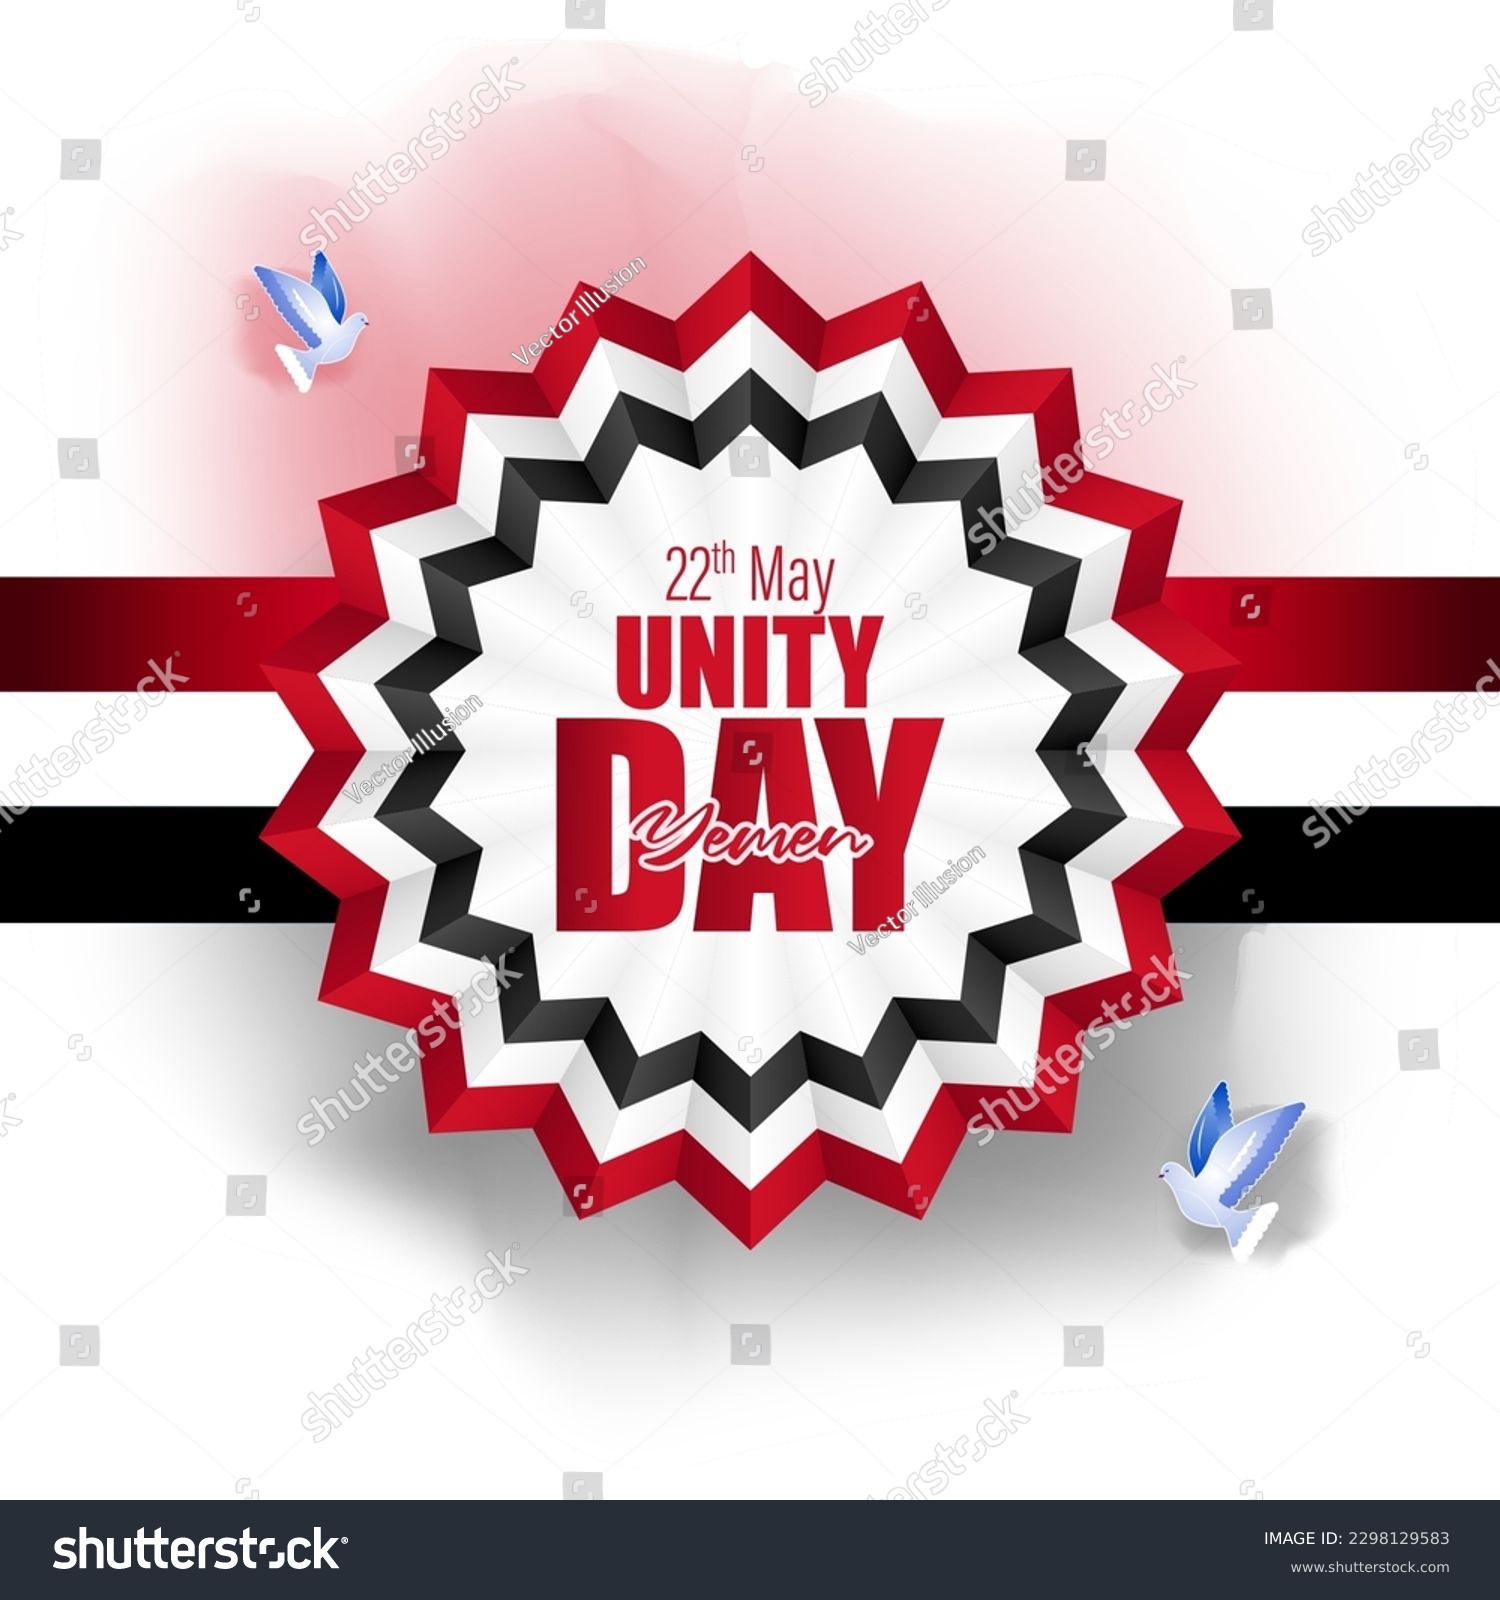 SVG of Vector illustration for Happy Unity Day Yemen social media story feed set mockup template svg